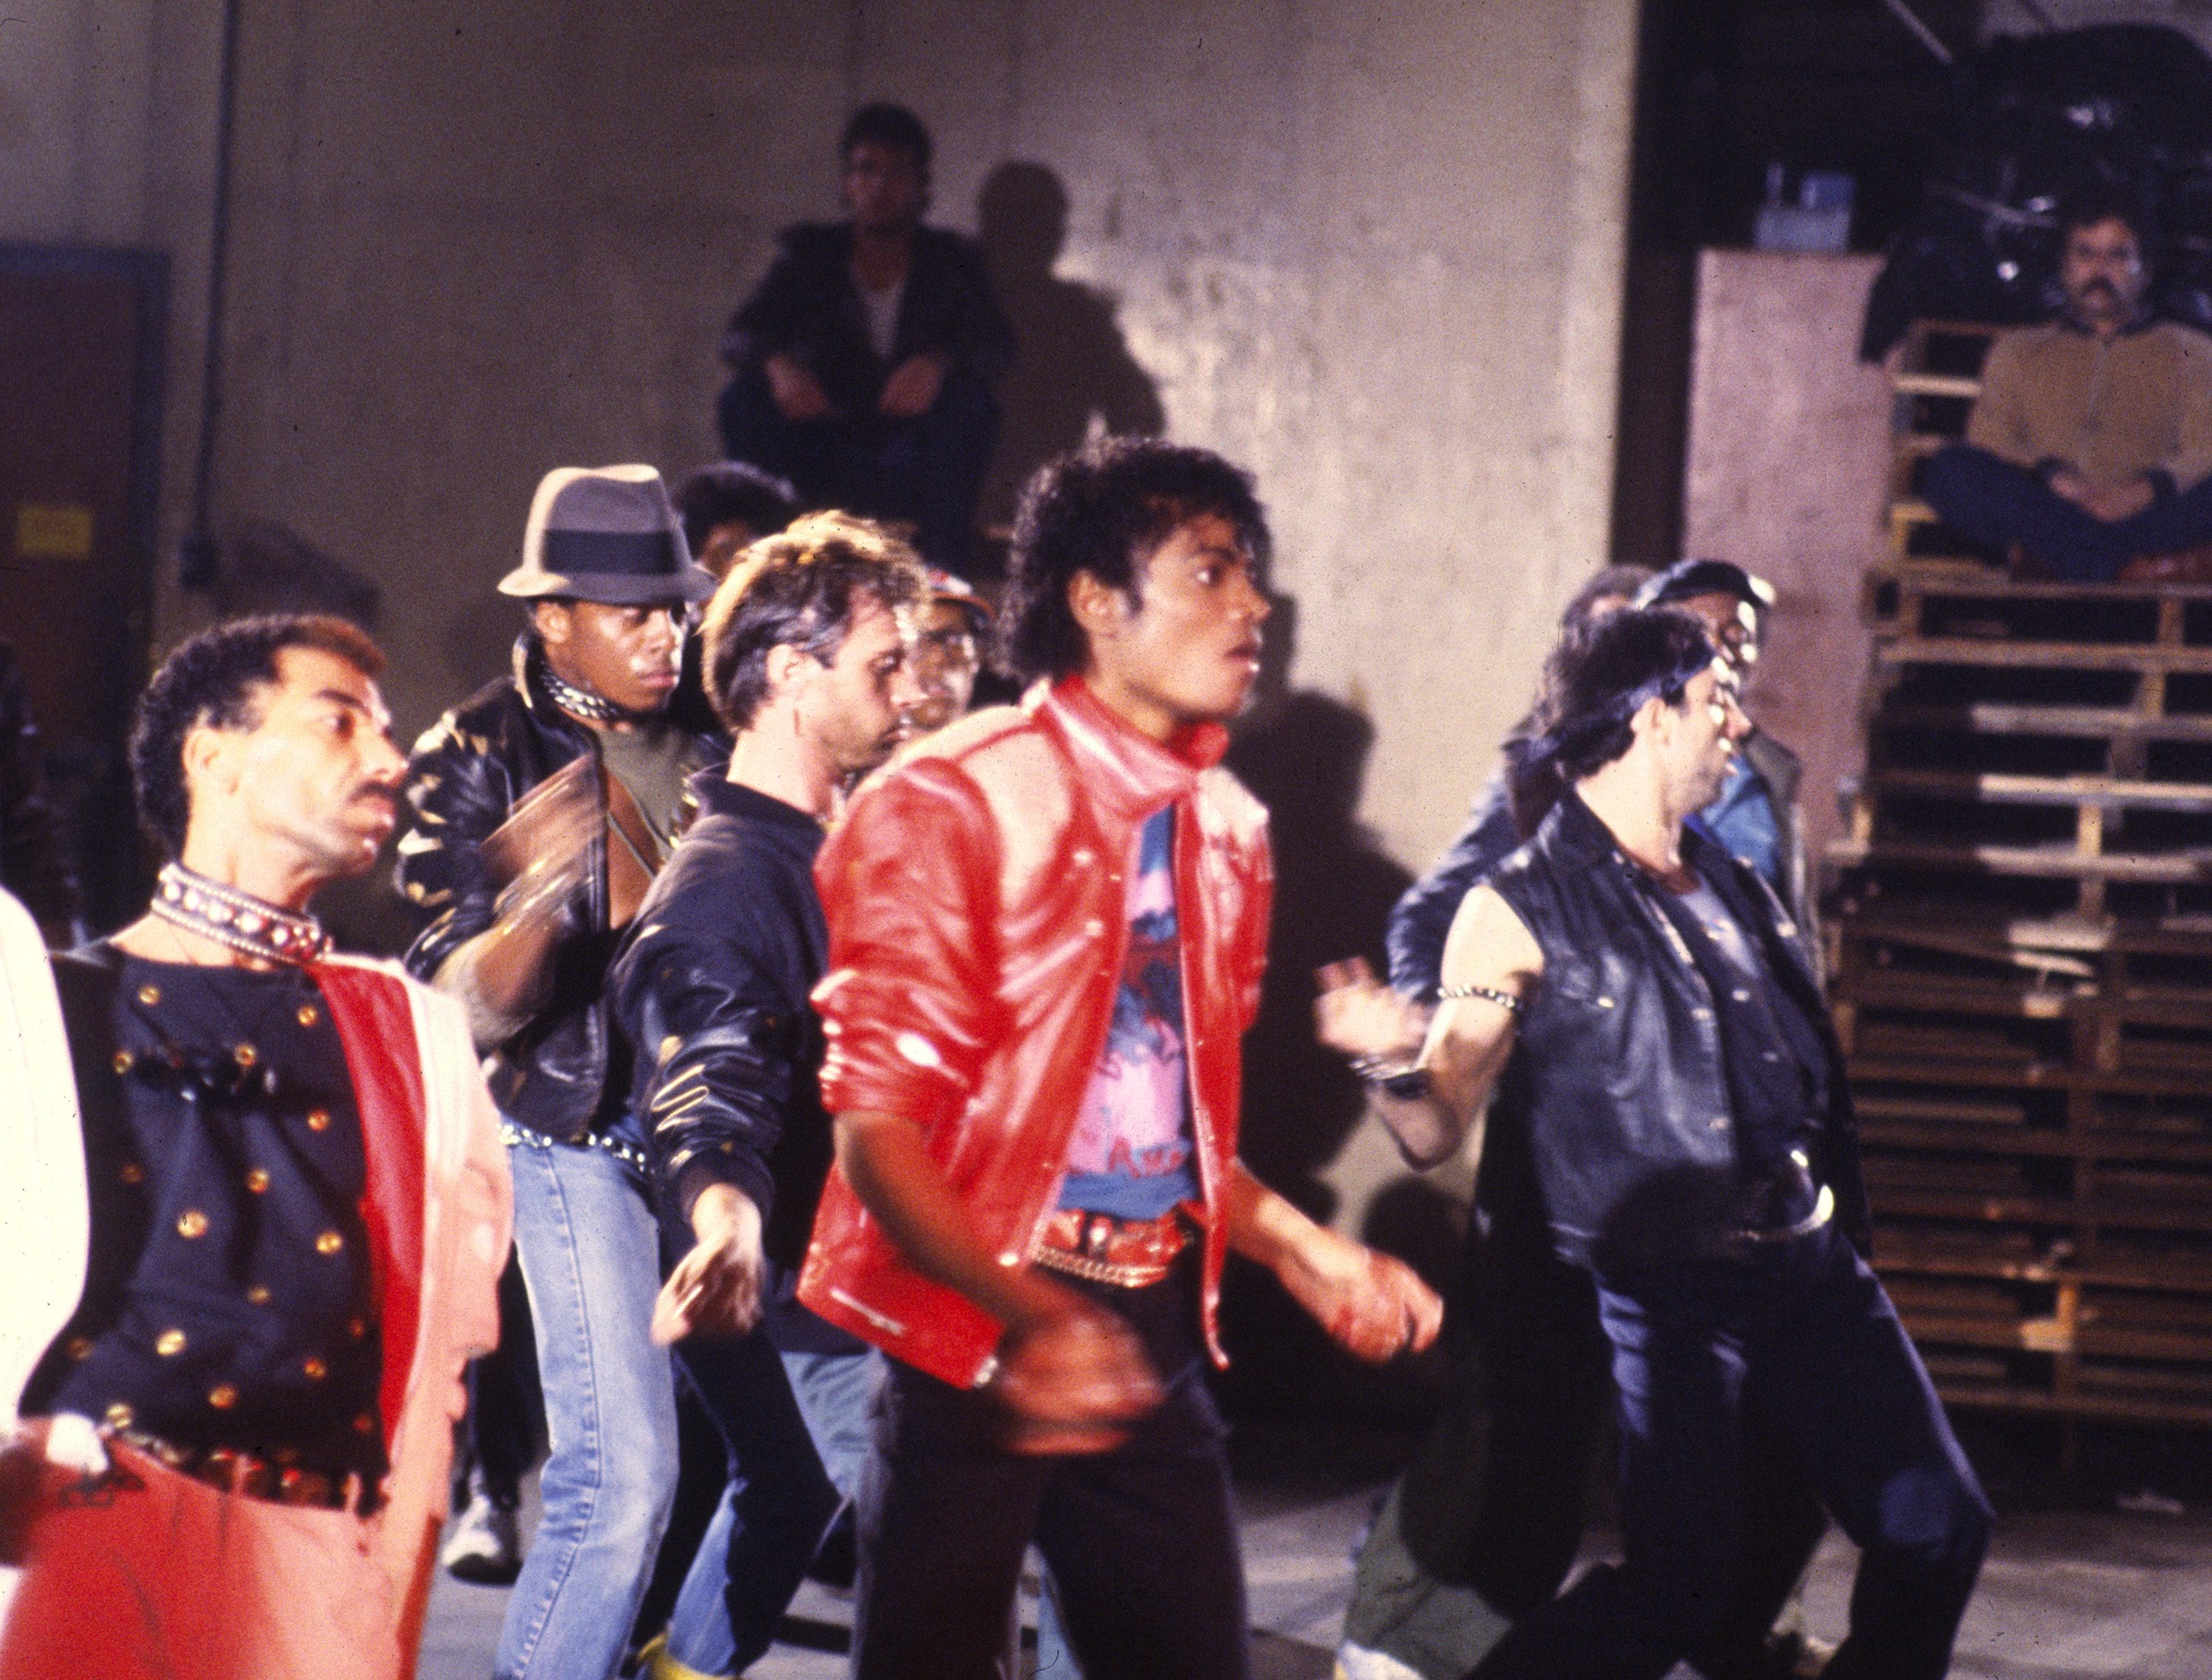 Michael Jackson's 1983 "Beat It" video